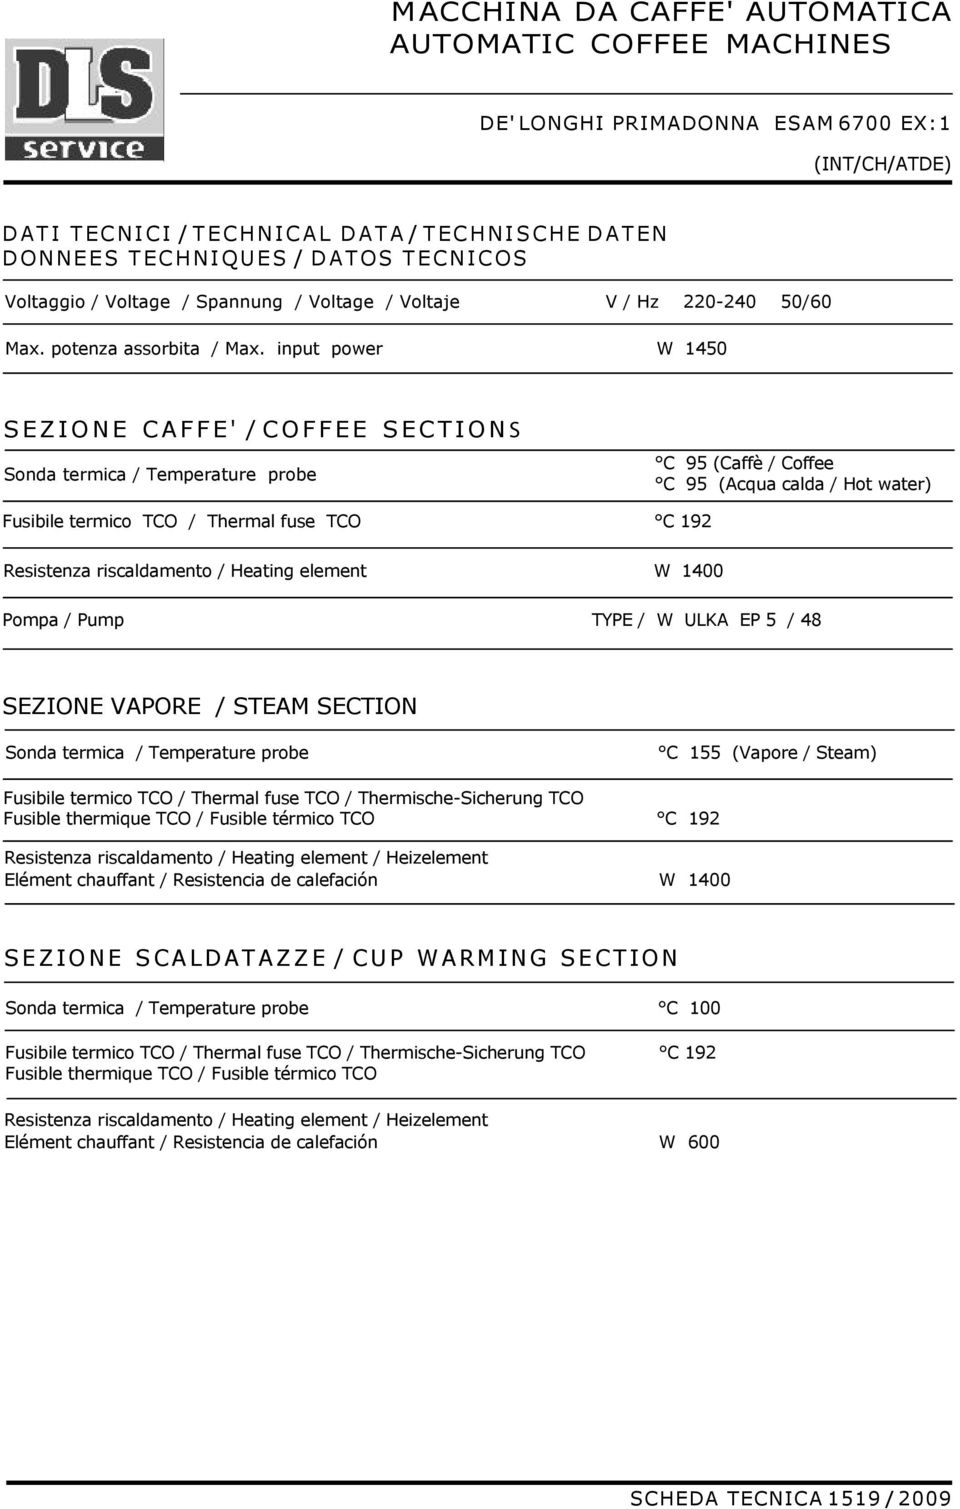 input power W 1450 SEZIONE CAFFE' / COFFEE SECTIONS Sonda termica / Temperature probe C 95 (Caffè / Coffee C 95 (Acqua calda / Hot water) Fusibile termico / Thermal fuse C 192 Resistenza